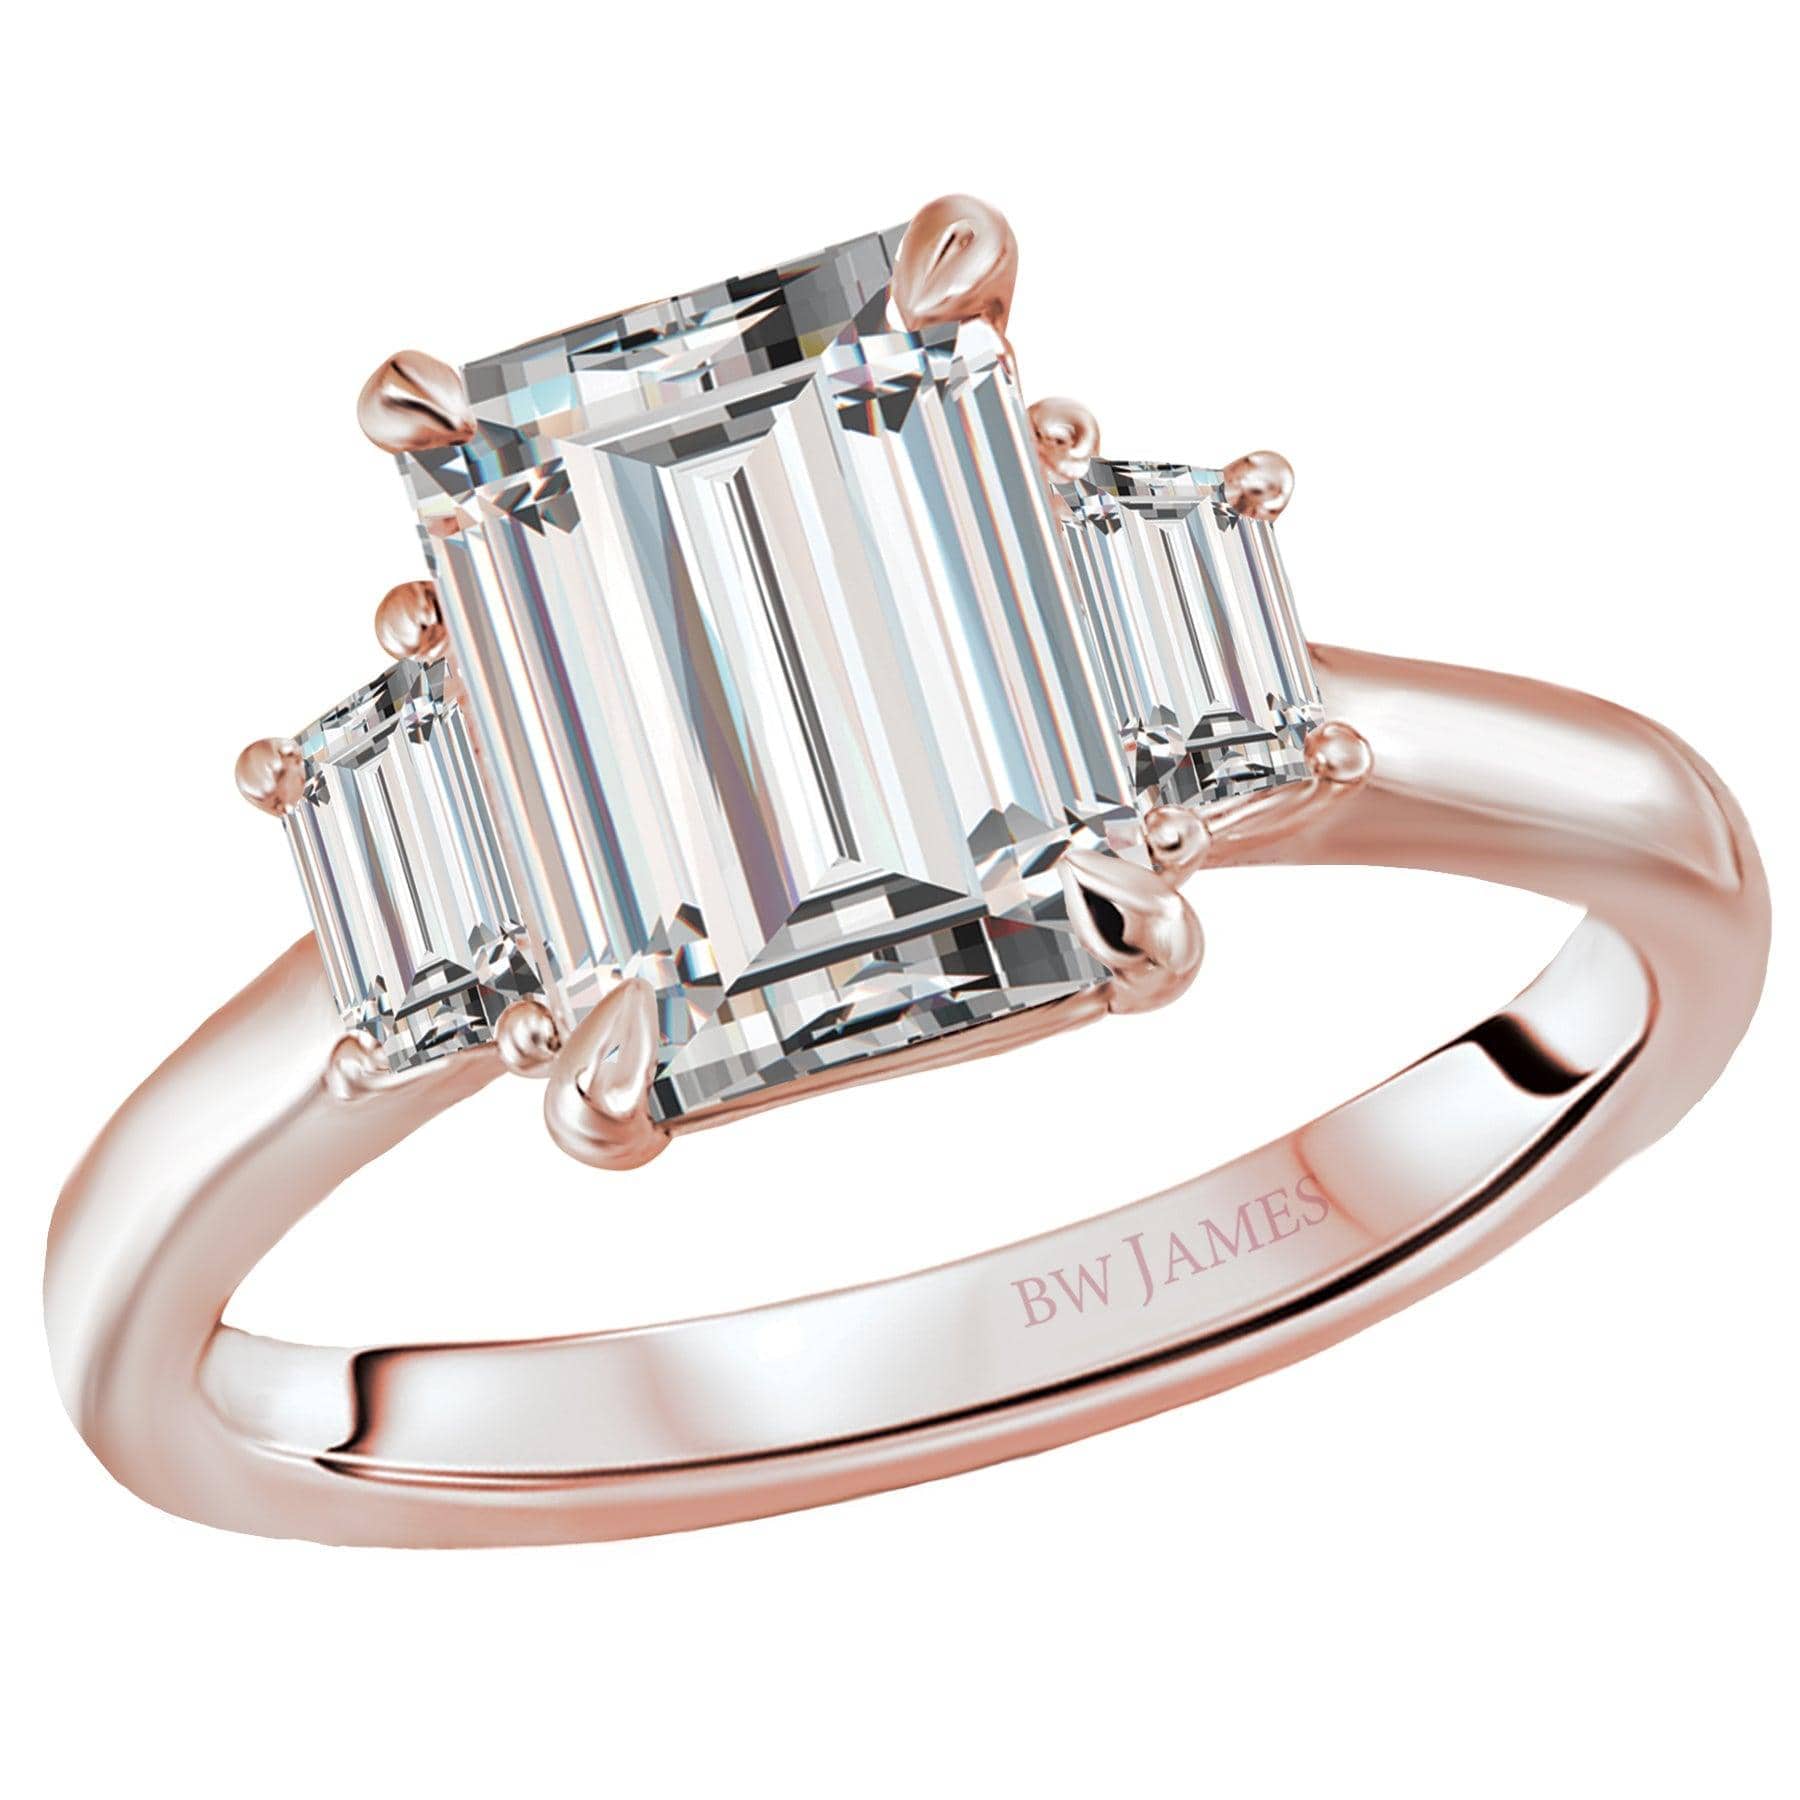 BW JAMES Engagement Rings "The Faith" Emerald Shape Three Stone  Semi-Mount Diamond Ring